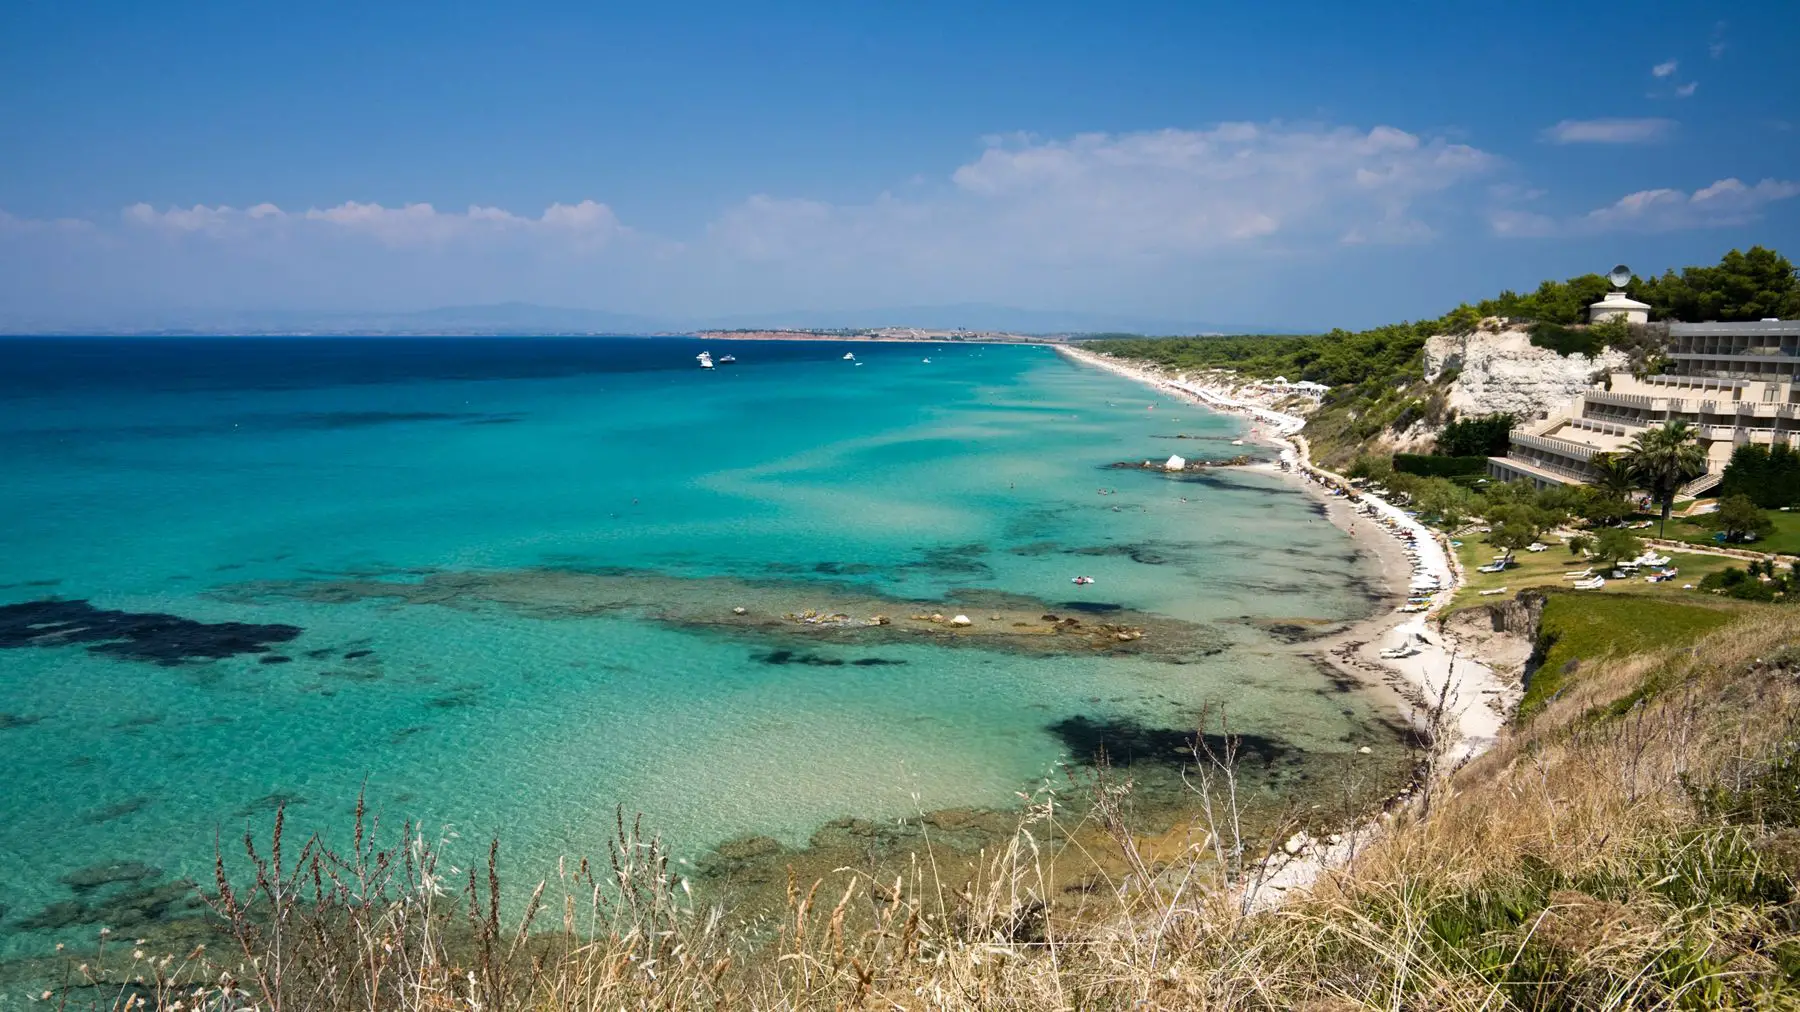 Tourist's guide to Kassandra - a popular beach region on Halkidiki in Greece